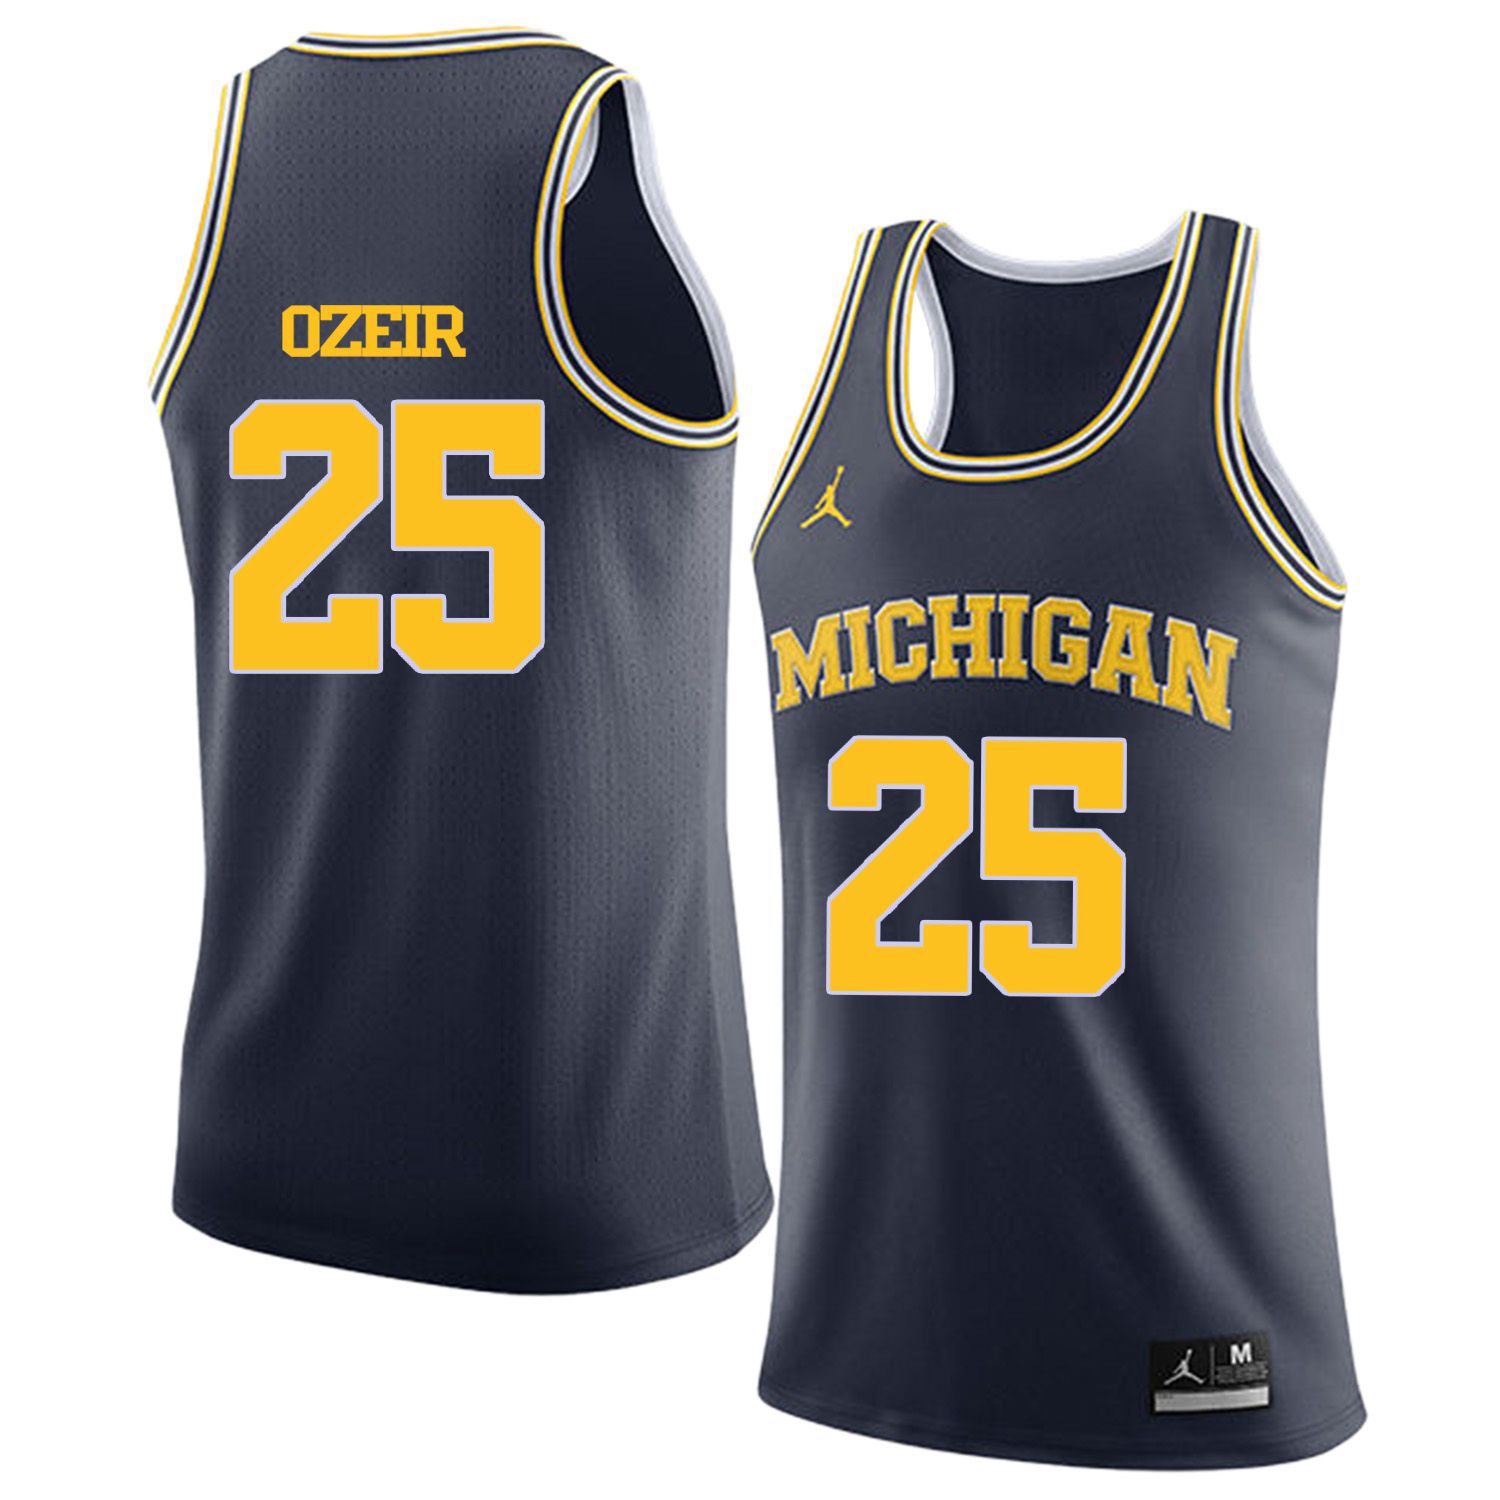 Men Jordan University of Michigan Basketball Navy 25 Ozeir Customized NCAA Jerseys